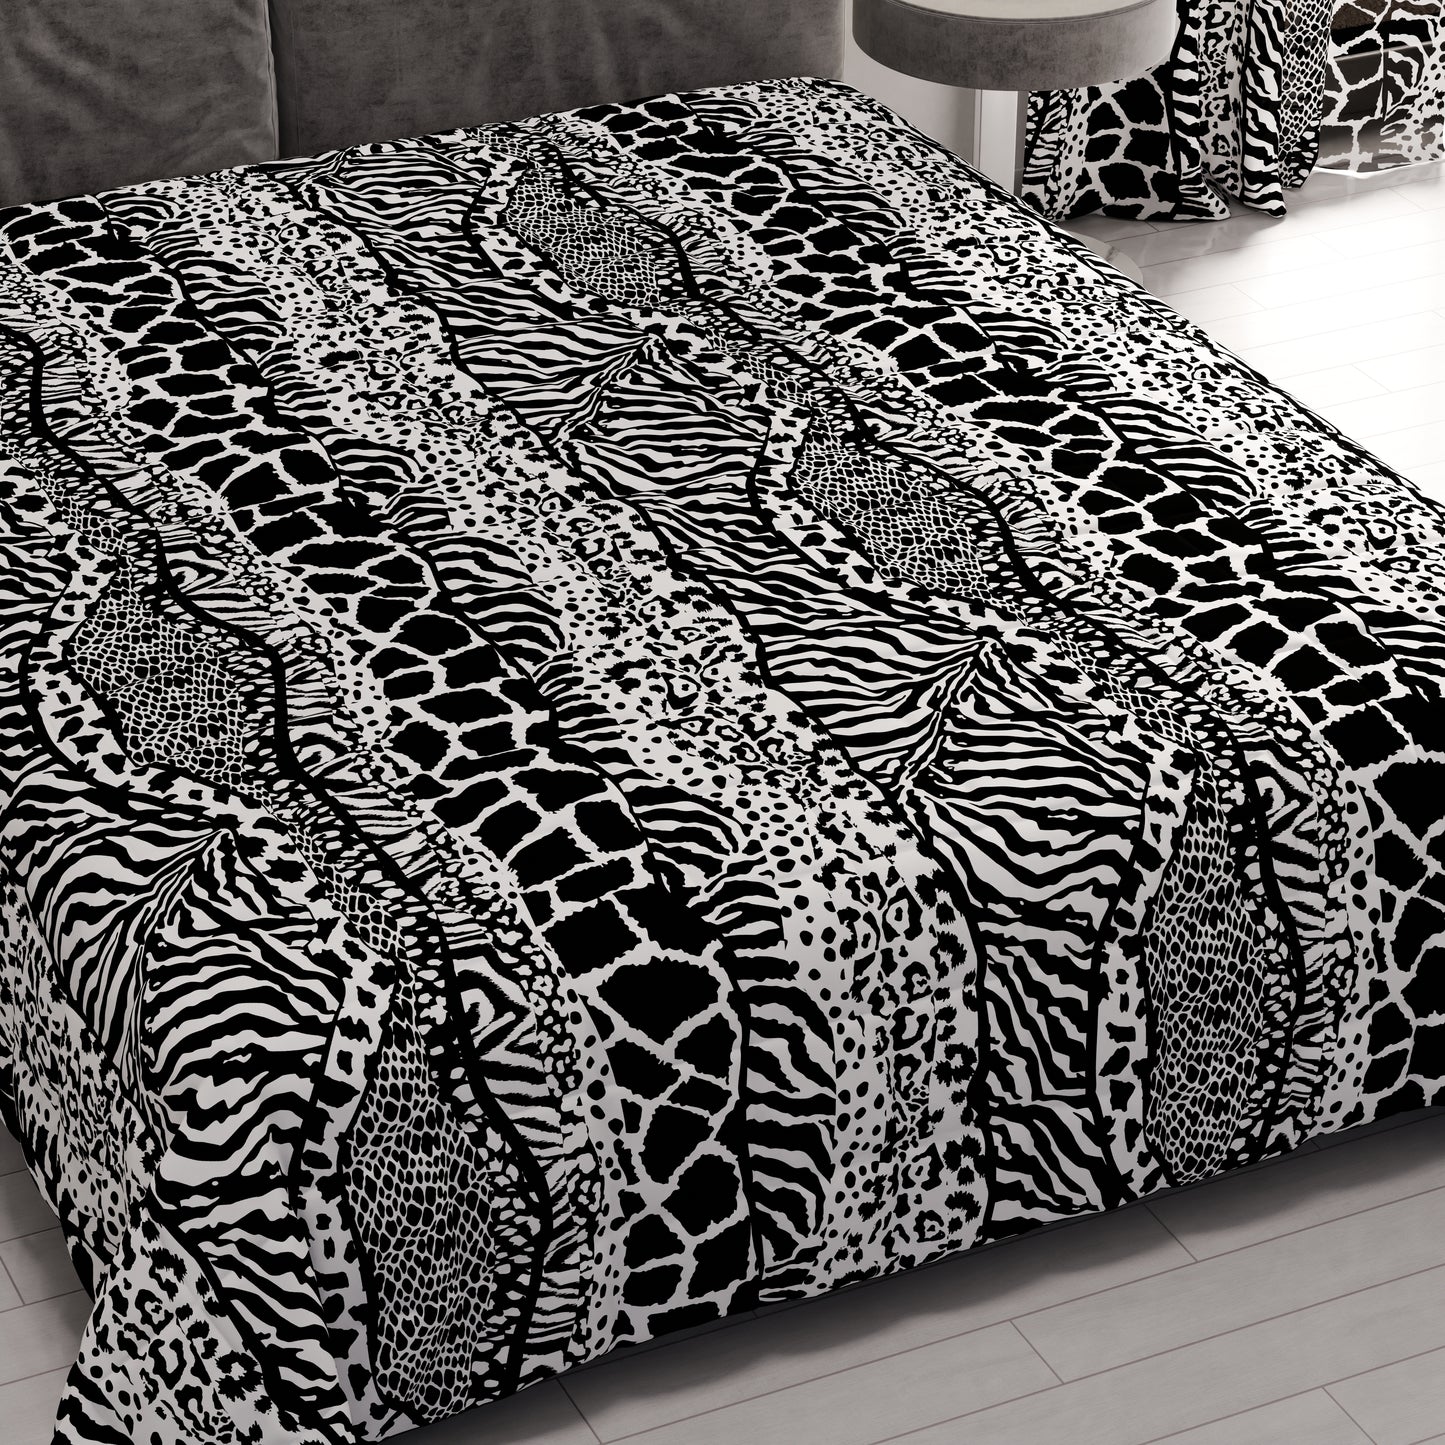 Spring/Autumn Quilted Bedspread in Animal Zebra Digital Print